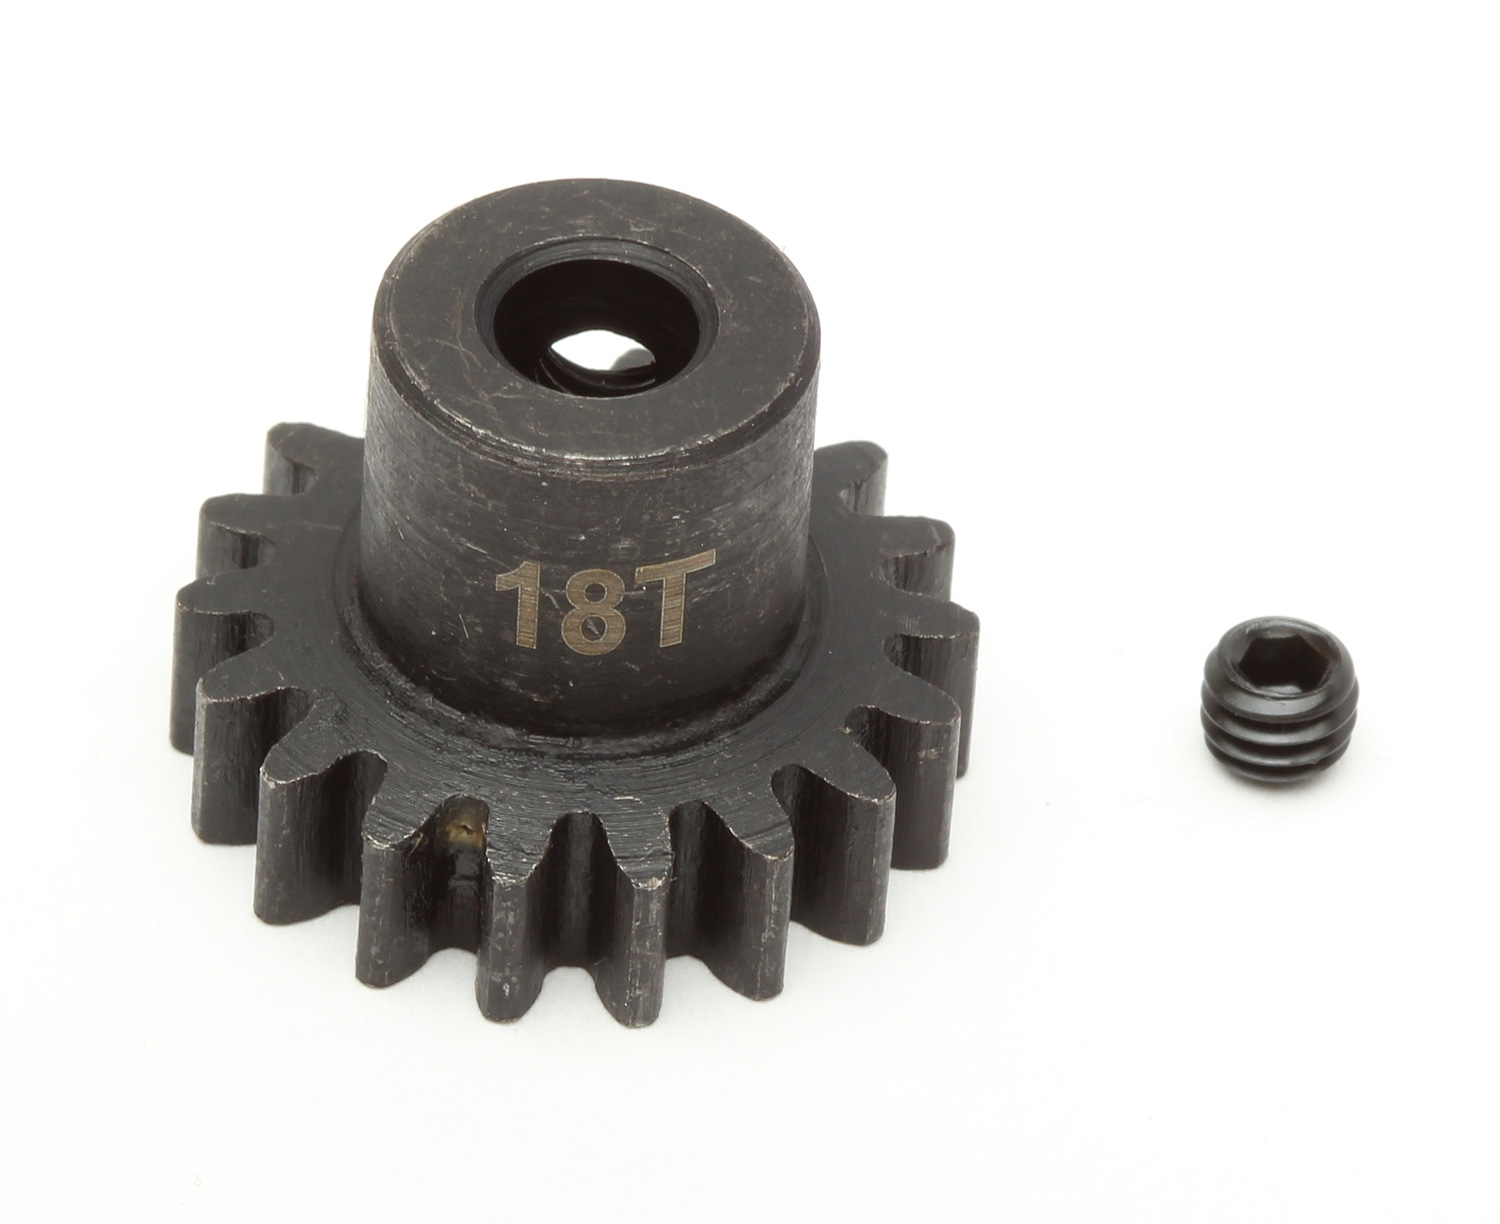 Steel Pinion Gear, 18T, Mod 1, 5 mm shaft